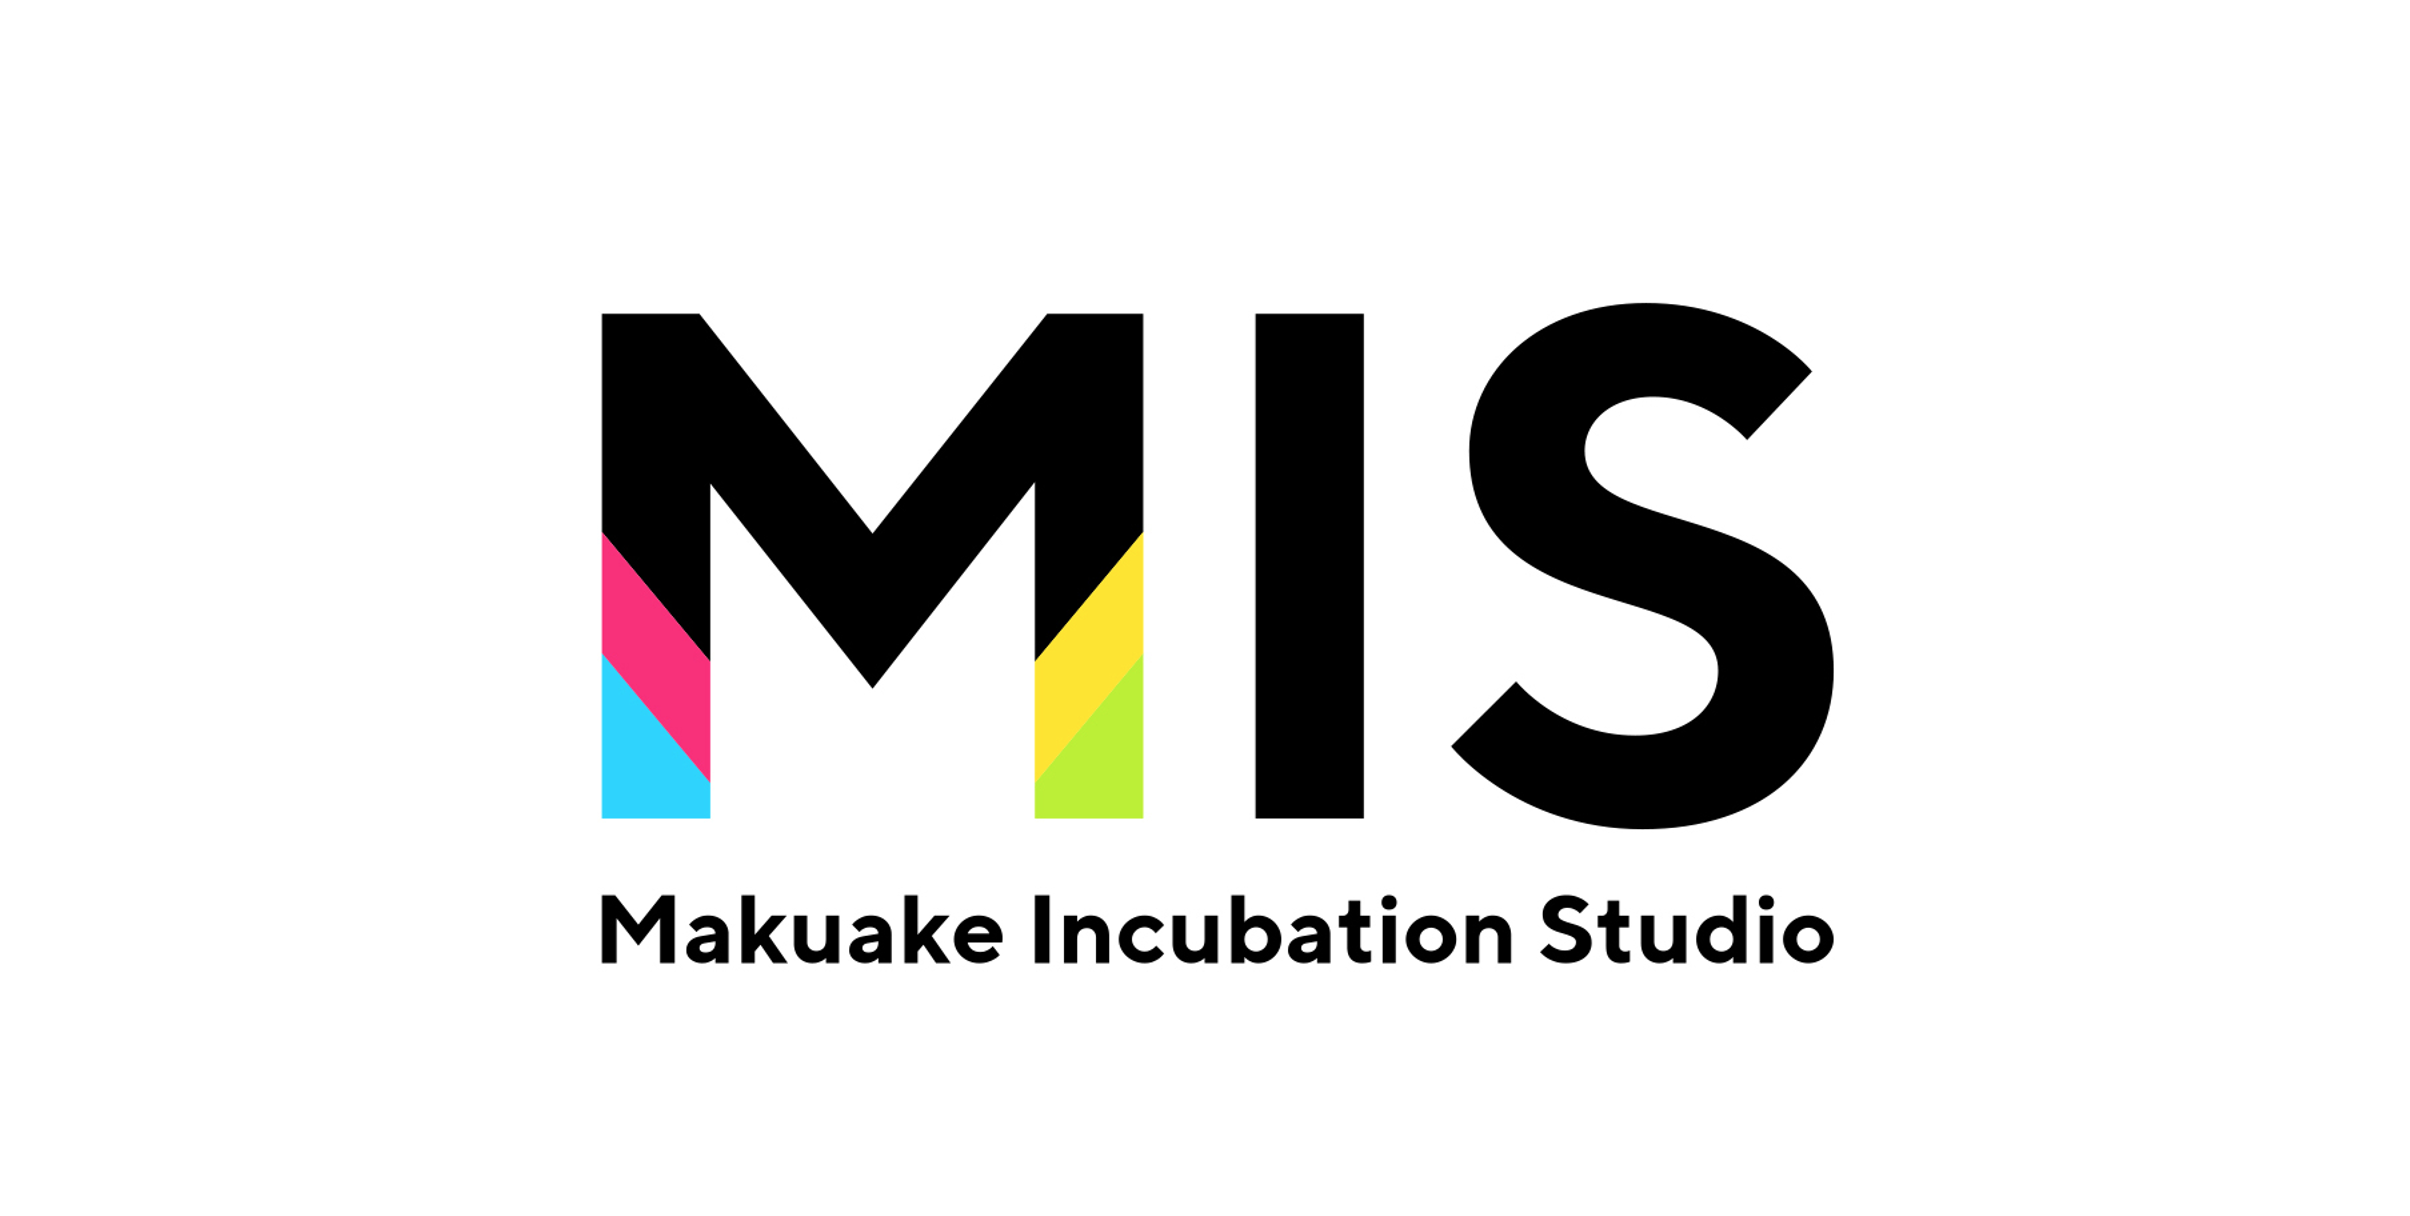 Makuake Incubation Studio（MIS）」が、ゼロから具体的な商品販売まで 